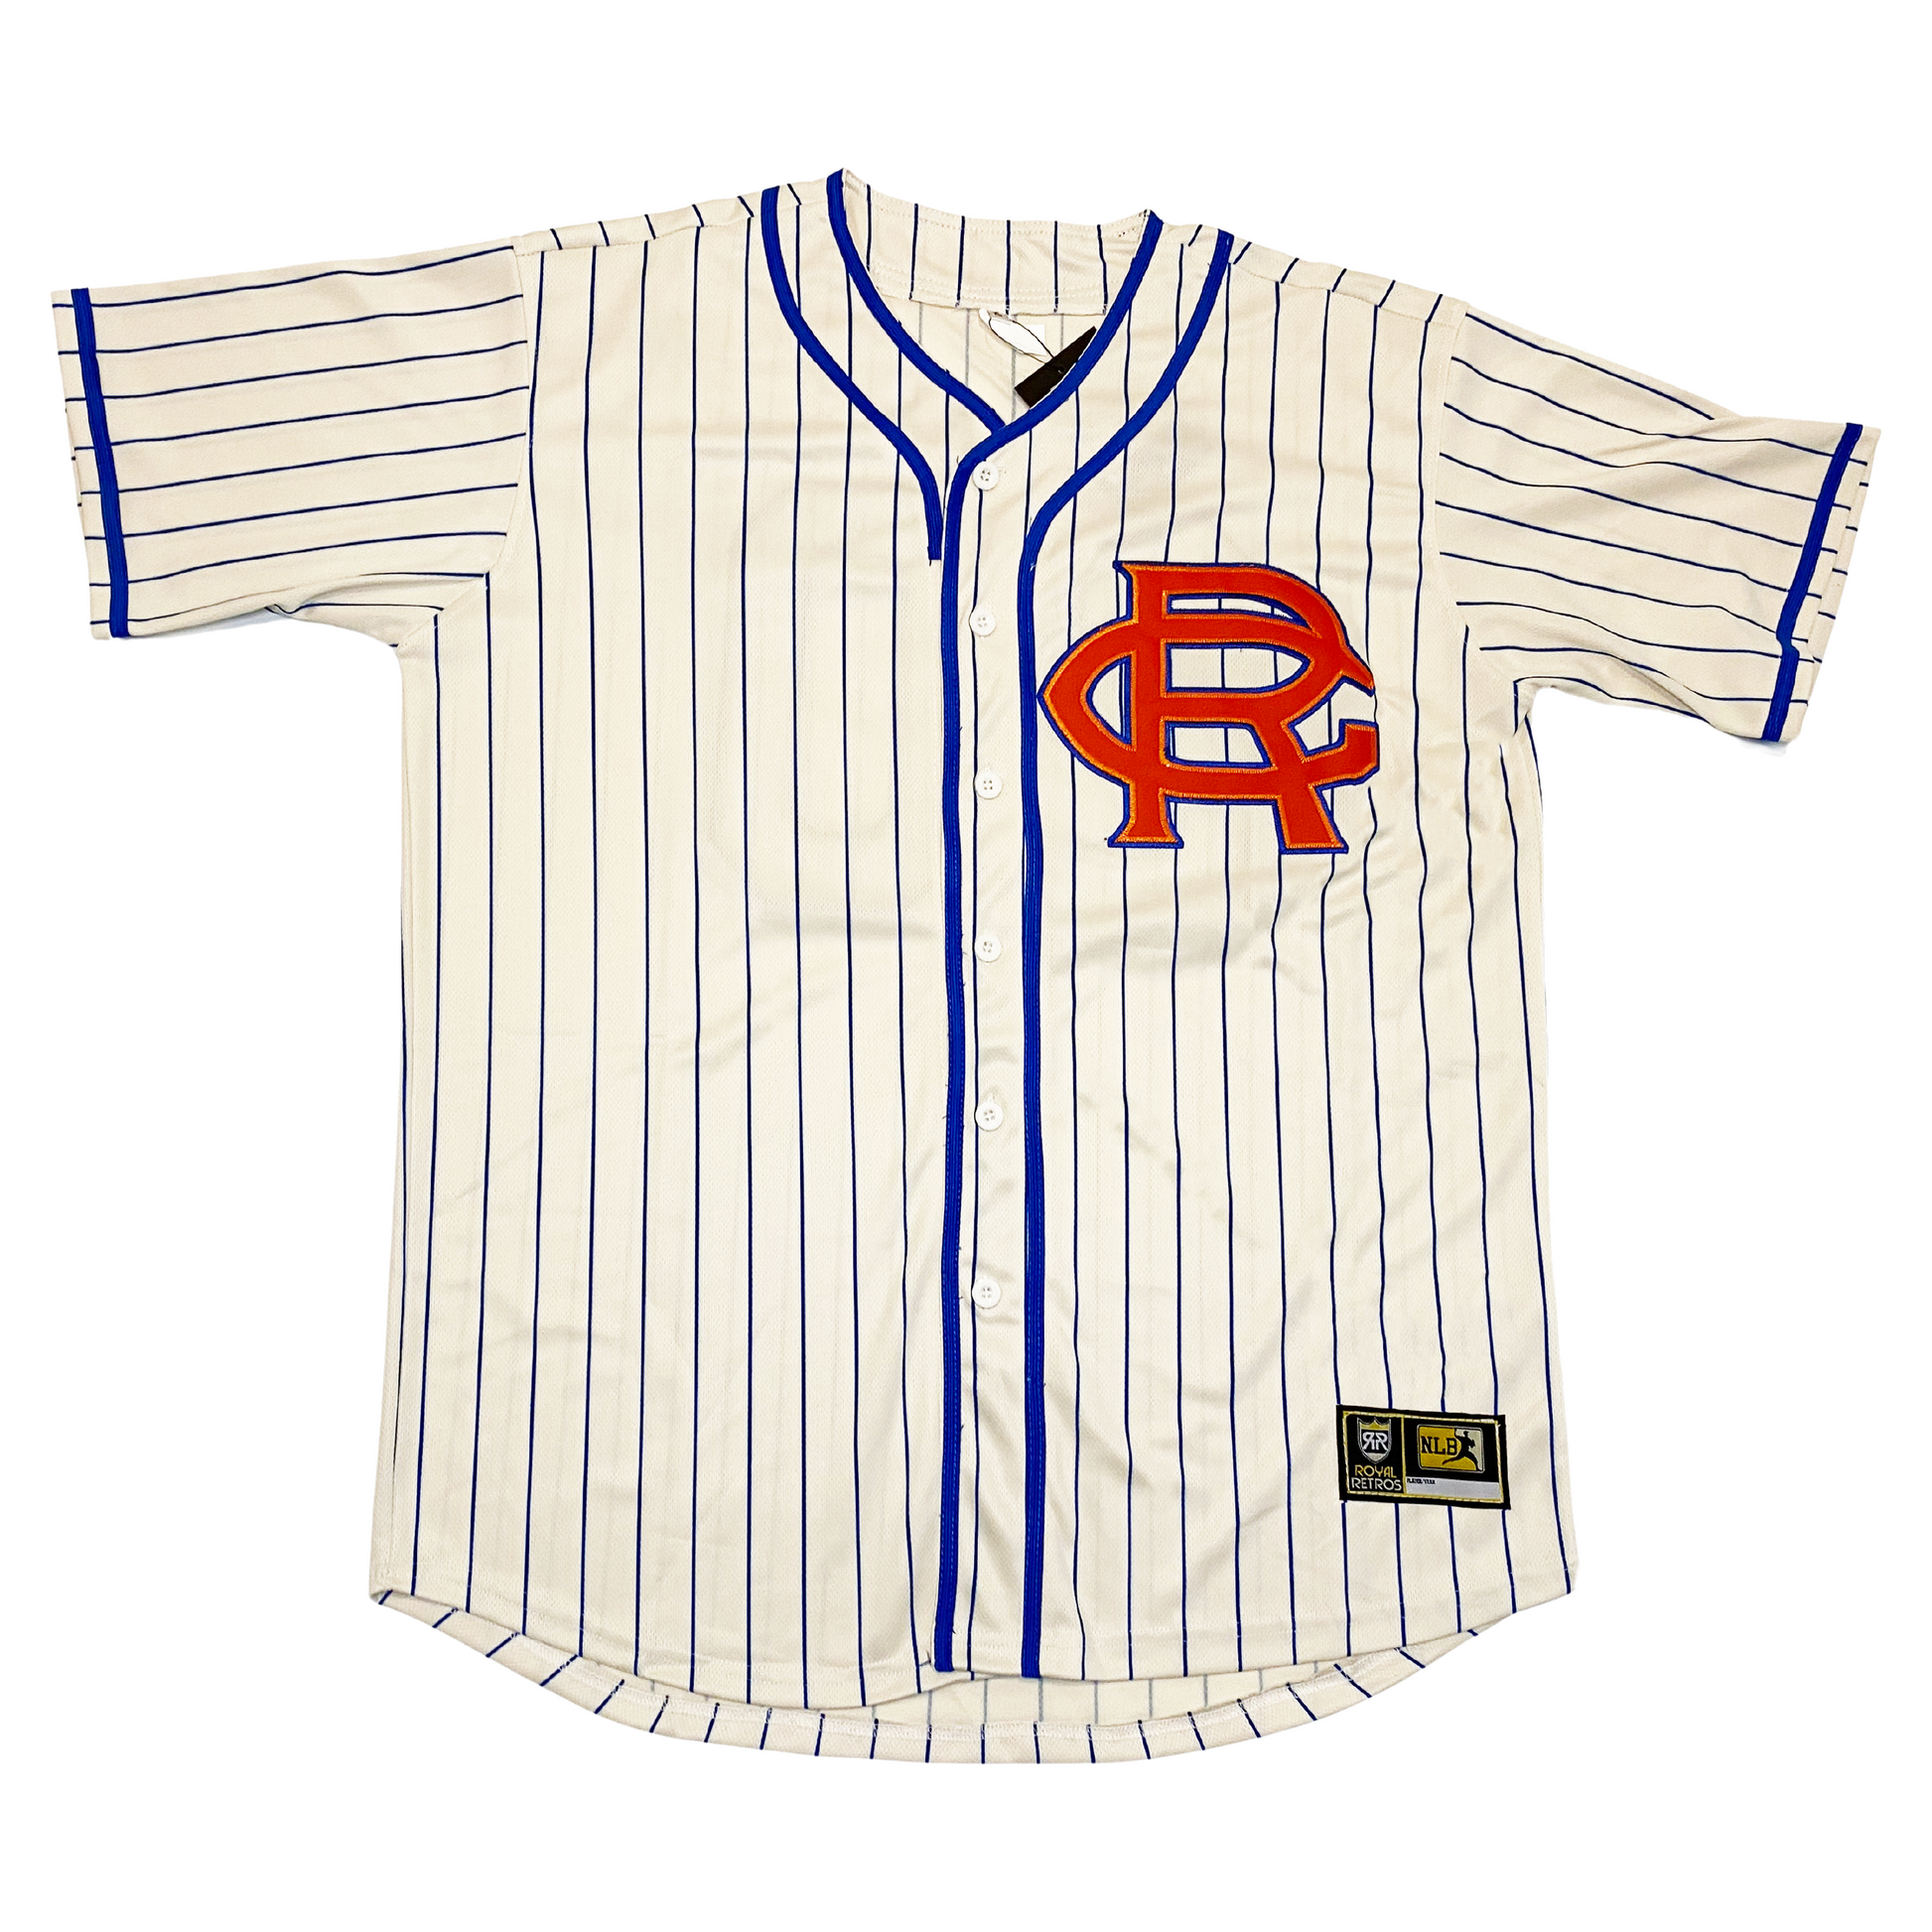 Hyper Than Hype Shirts Brooklyn Royal Giants Distressed Logo Shirt - Defunct Baseball Team - Celebrate New York Heritage and History - Hyper Than Hype XXL / Grey Shirt